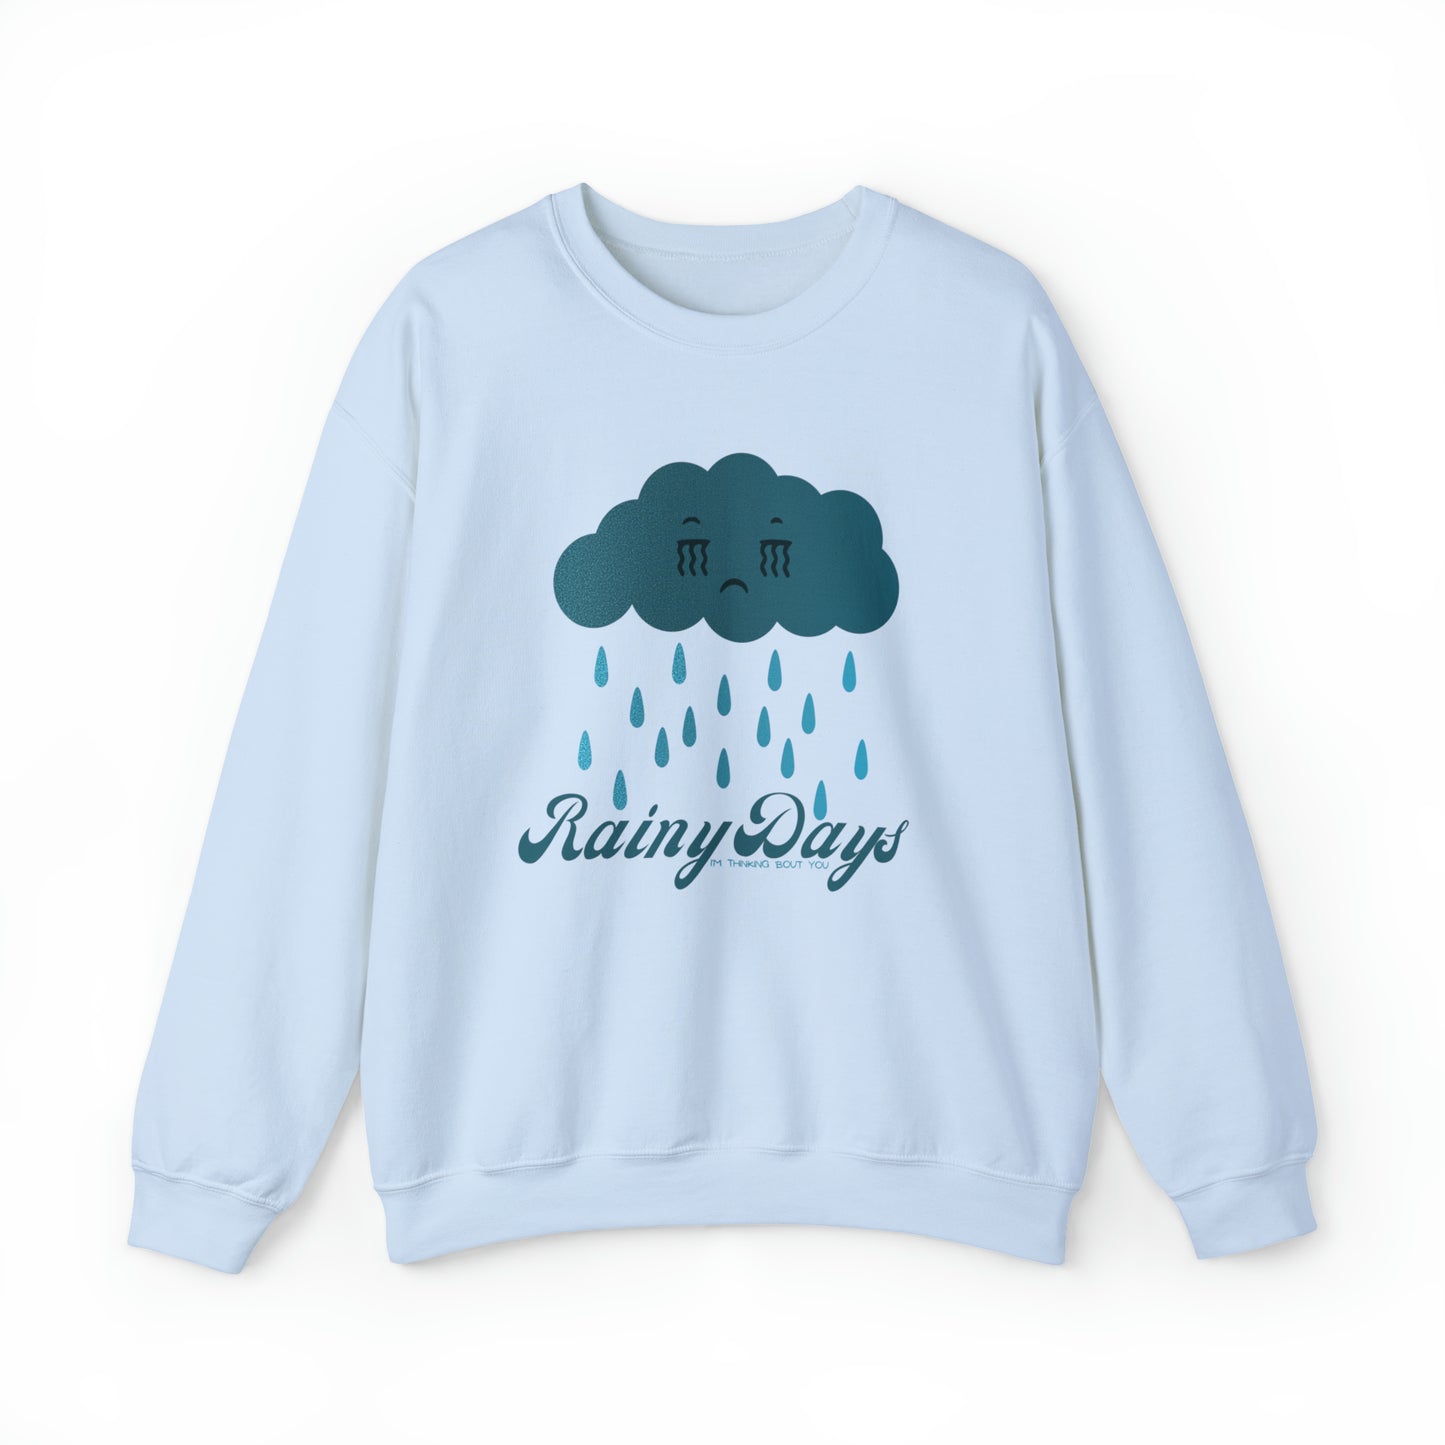 Rainy Days Sweatshirt